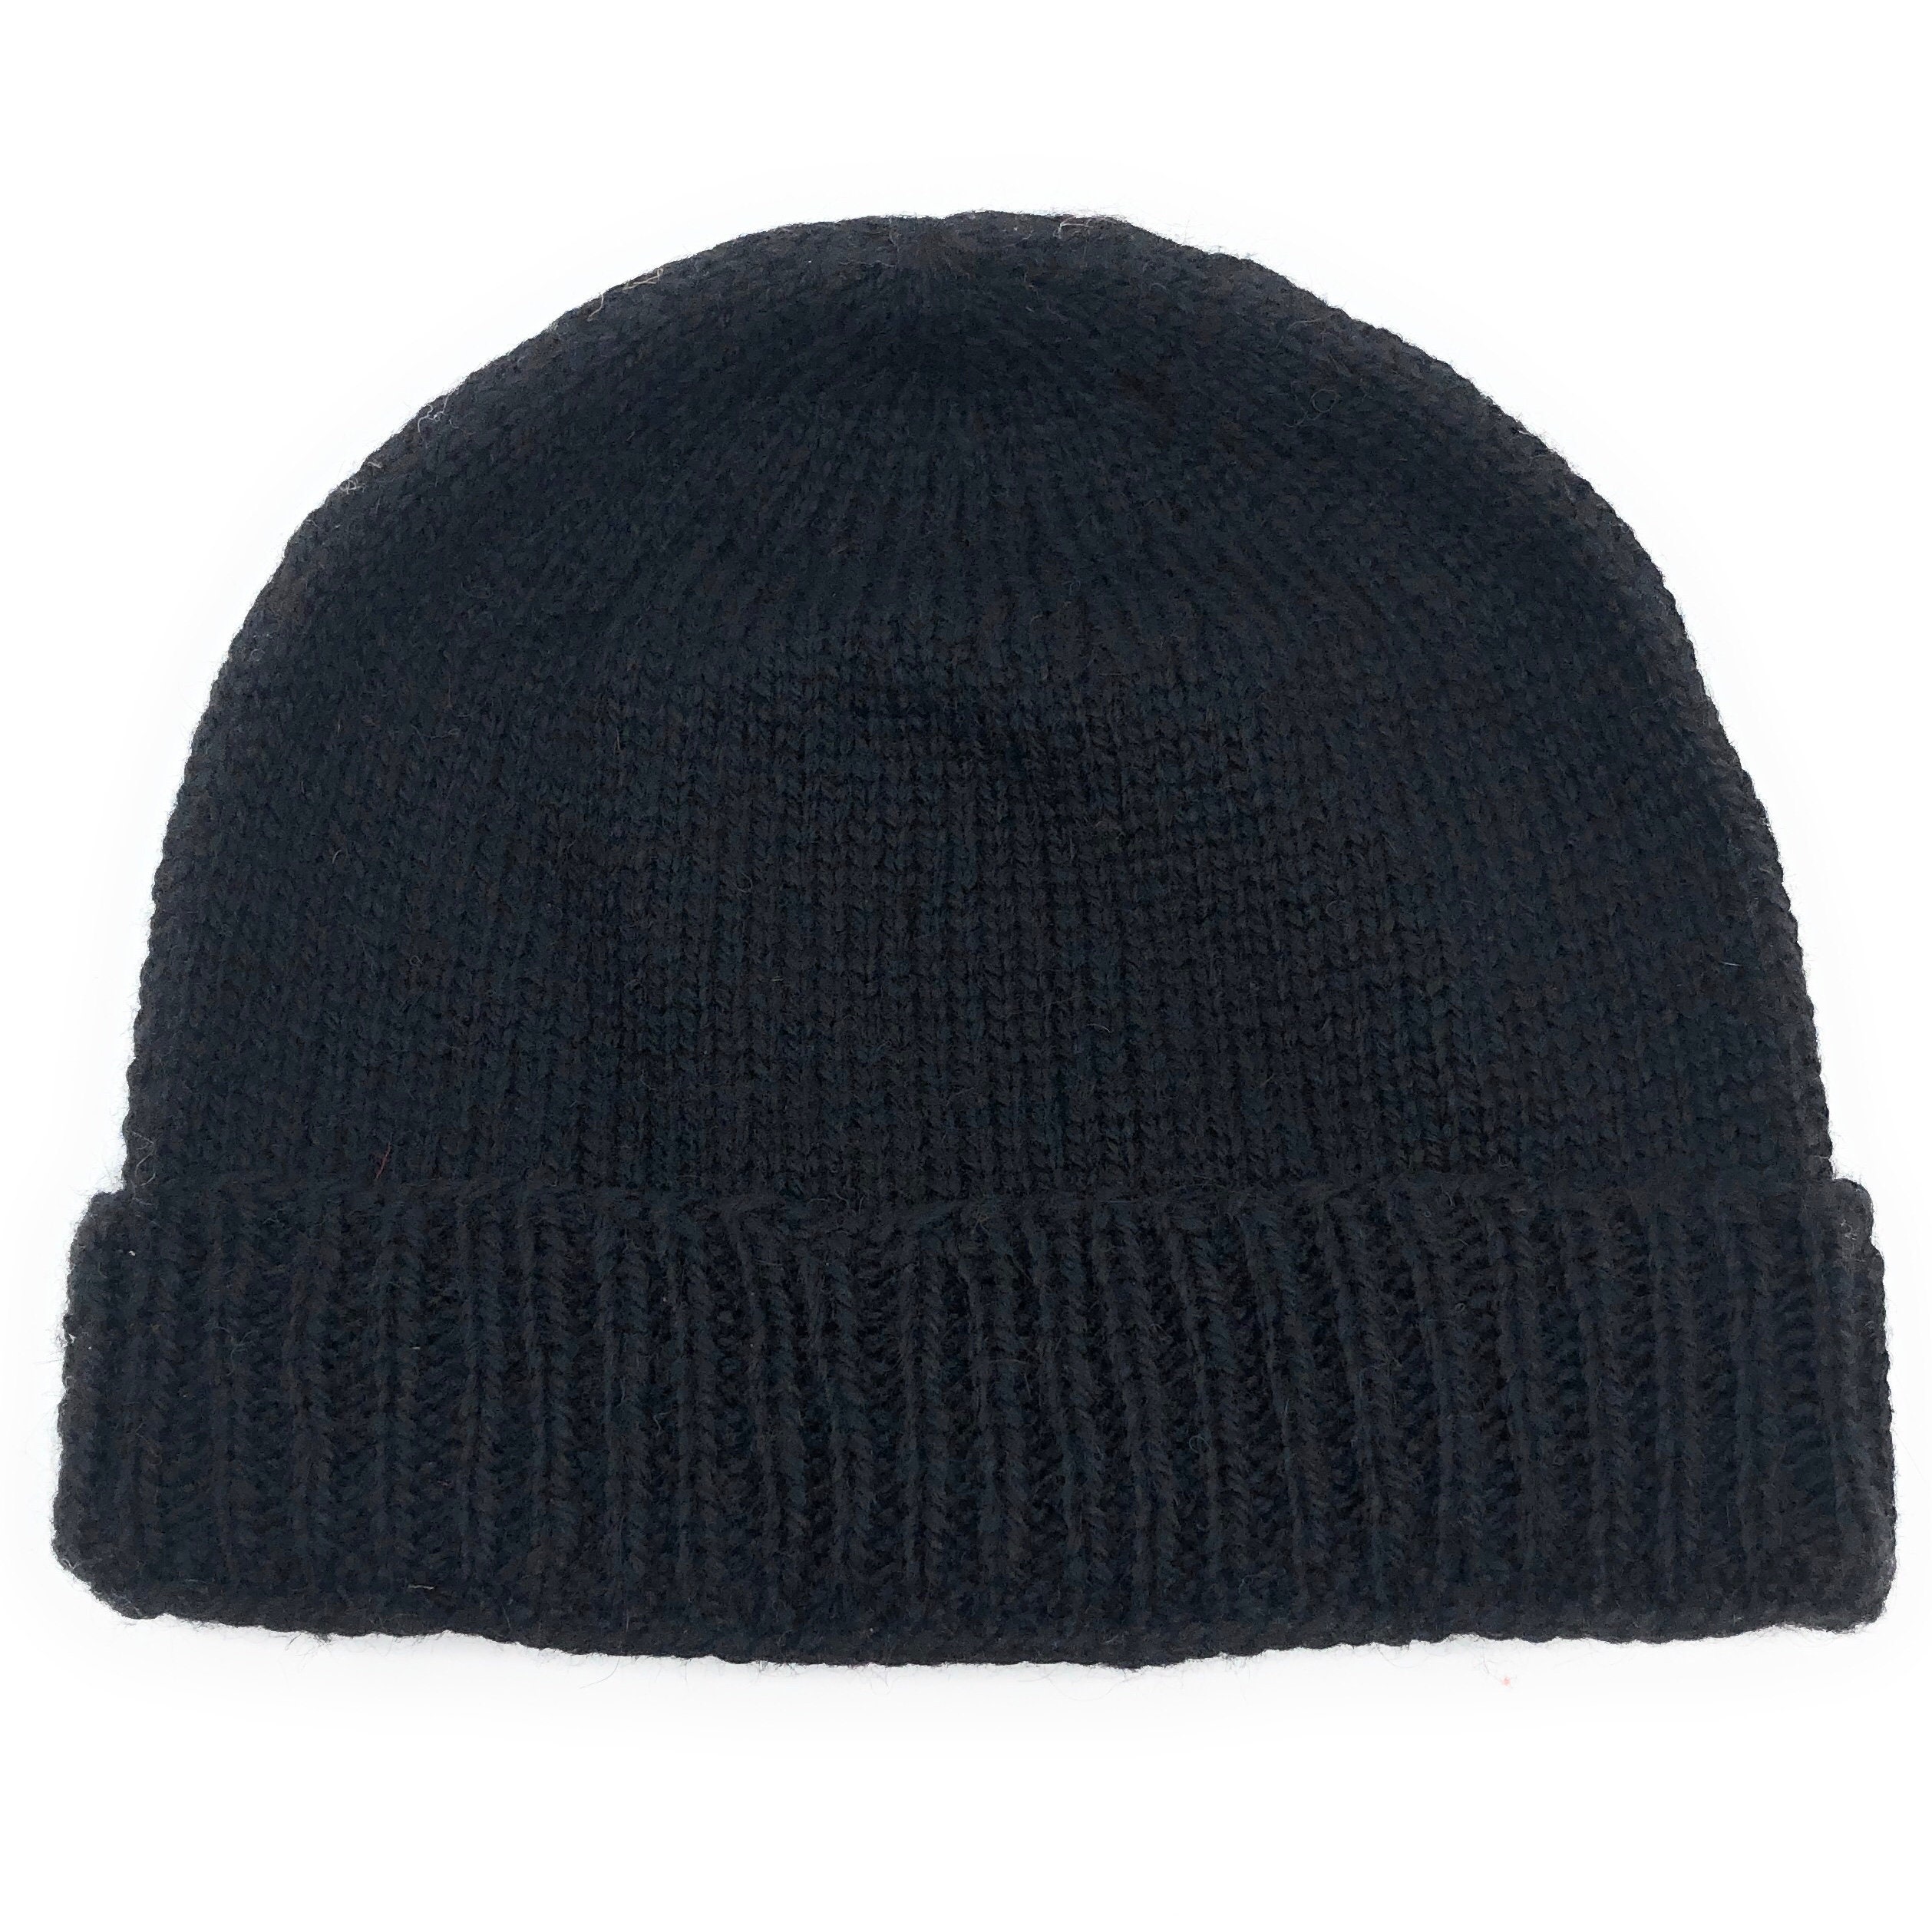 Hand Knit Alpaca Black Cuff Hat Knitted Beanie Ski Winter Warm - Etsy